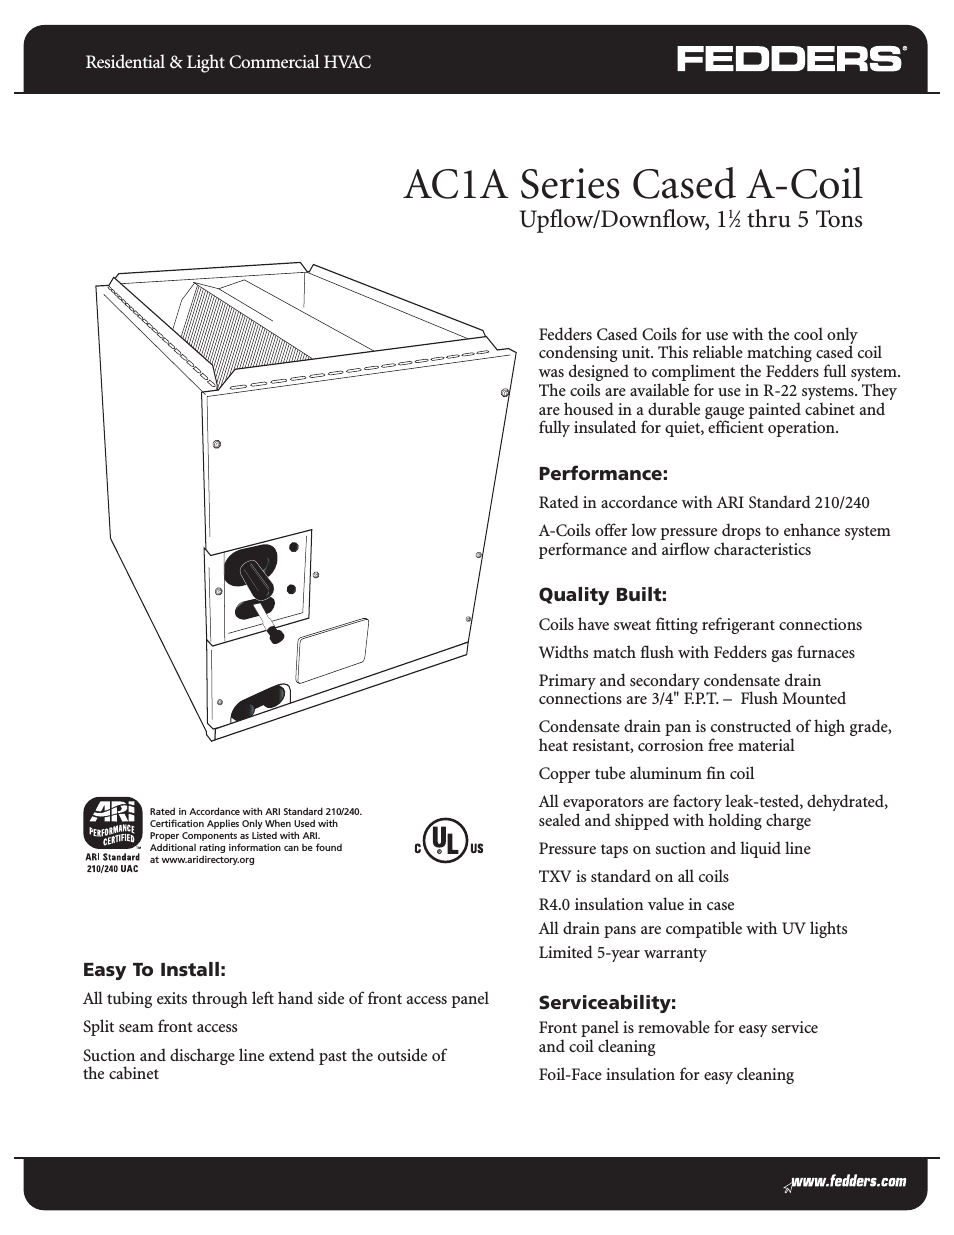 Cased A-Coil AC1A Series